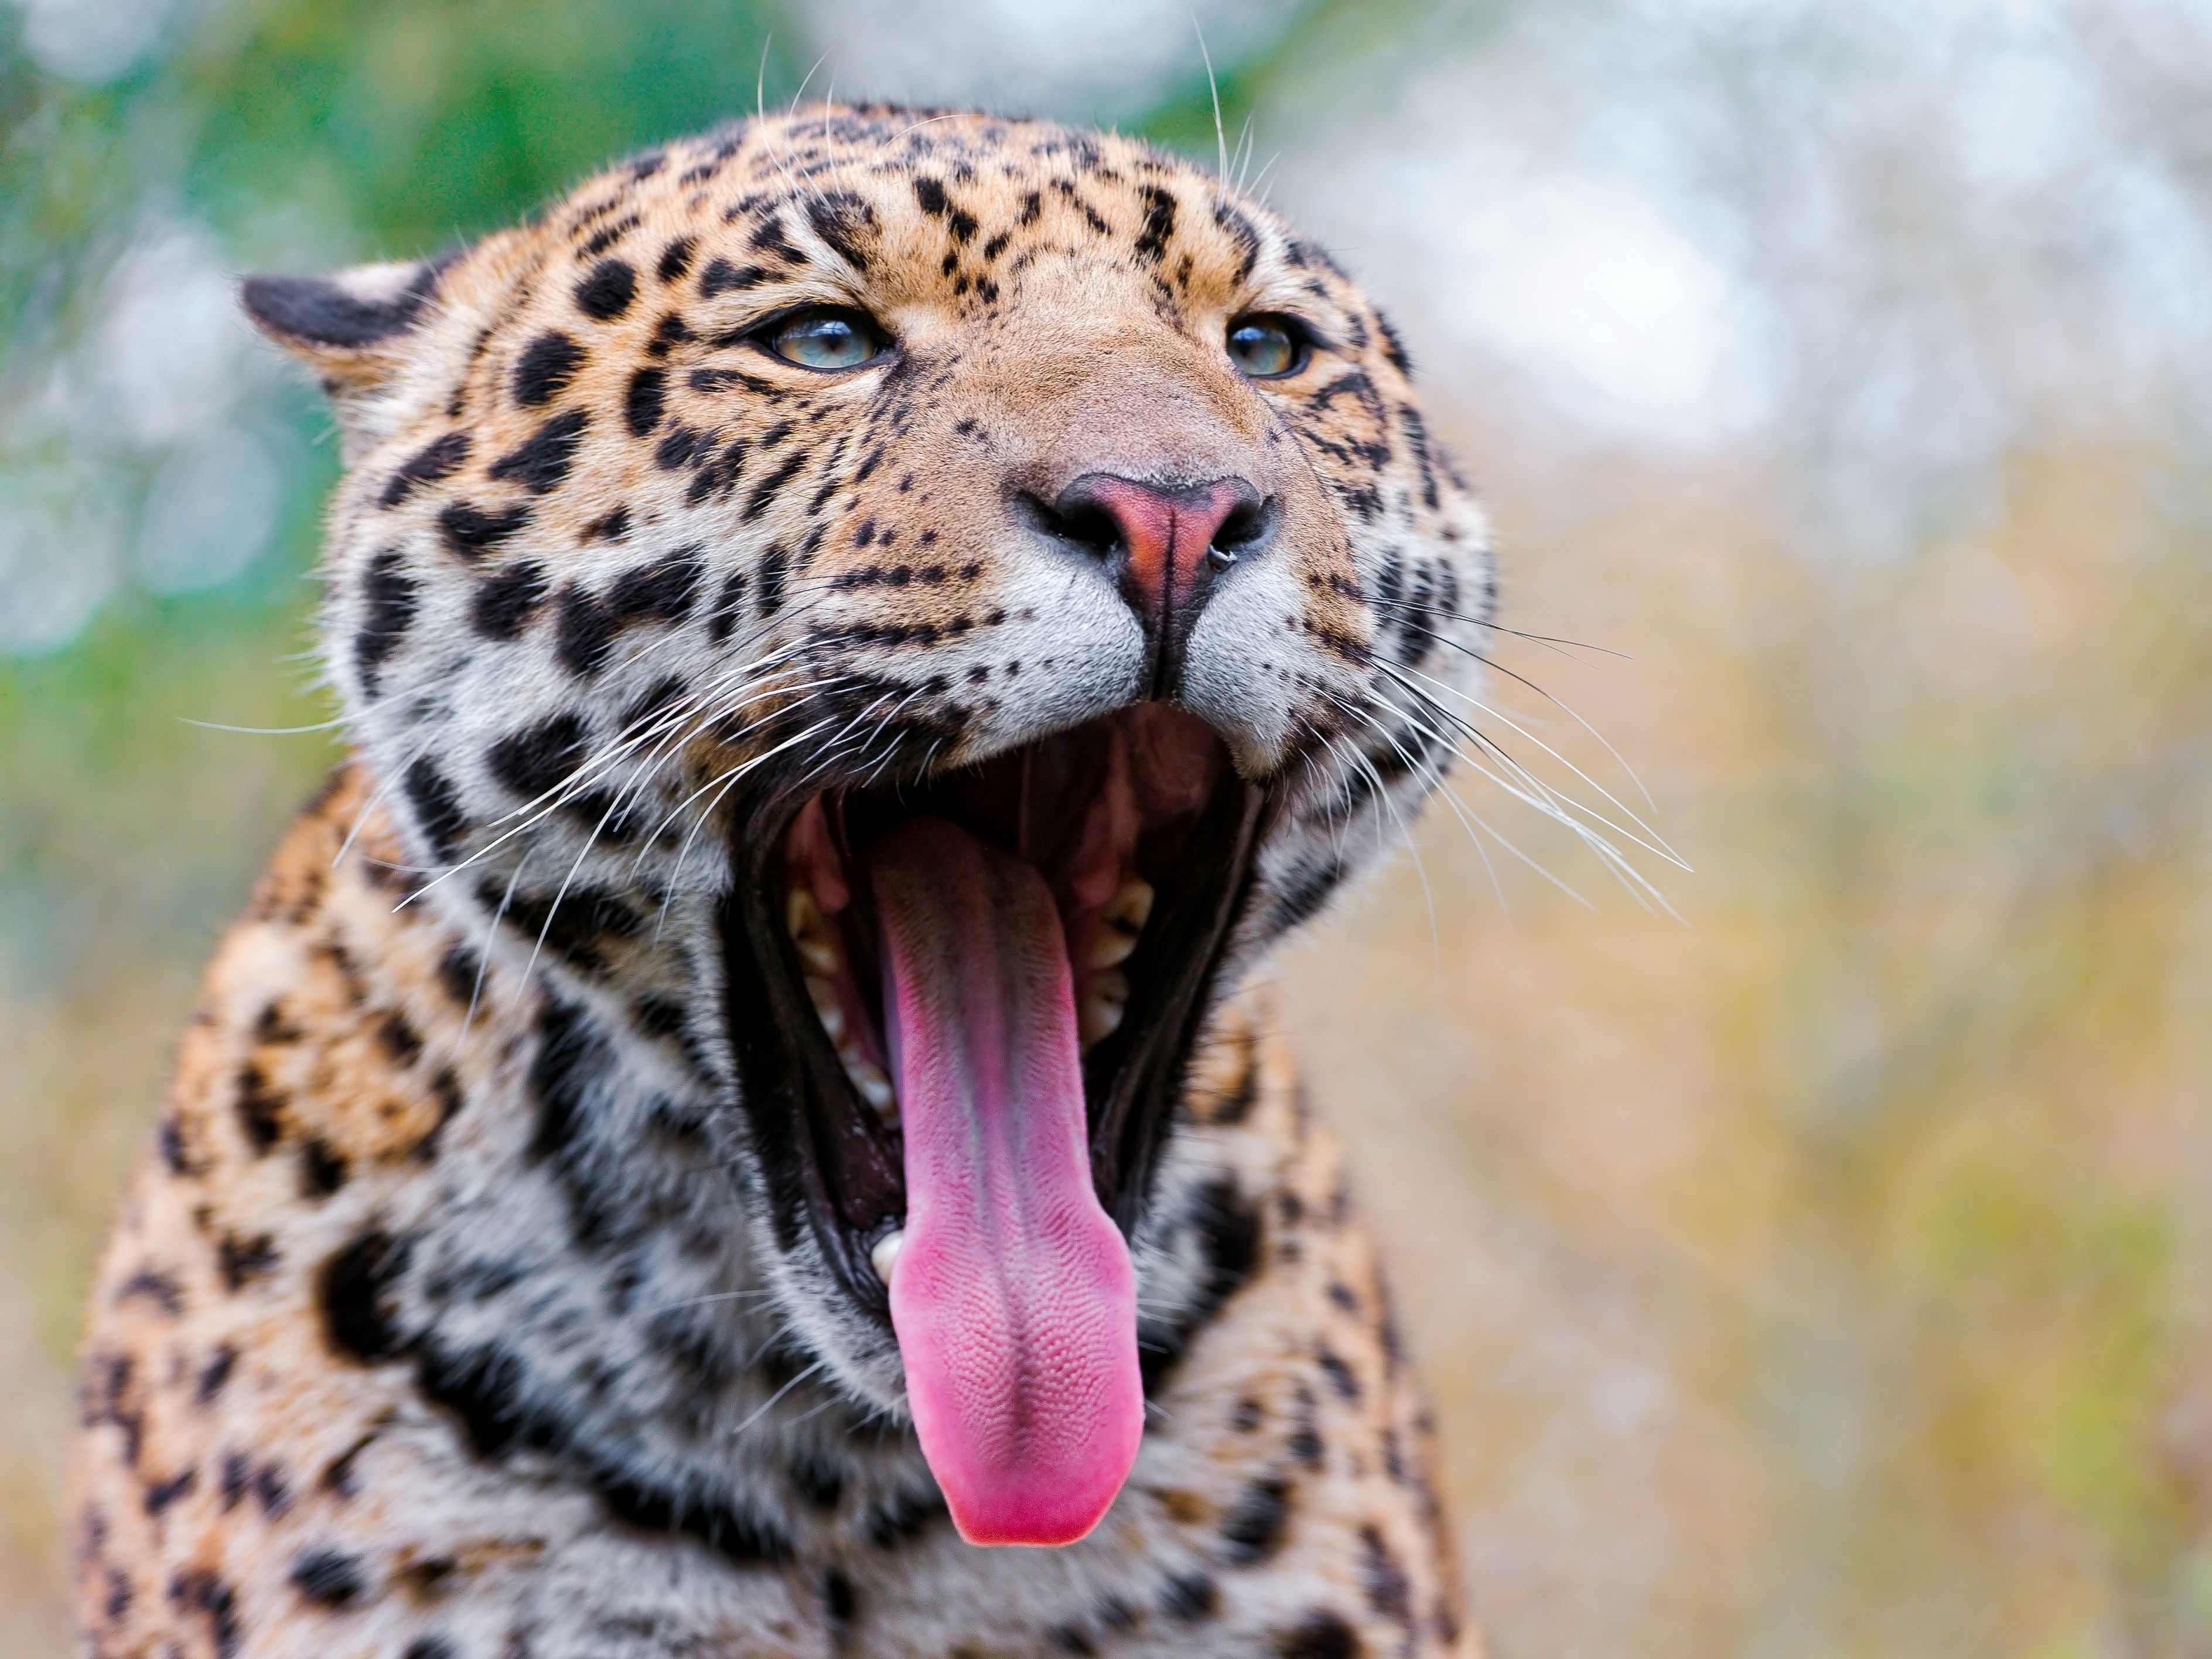 129612 descargar imagen animales, jaguar, caer, depredador, boca, bostezar, idioma, lengua: fondos de pantalla y protectores de pantalla gratis